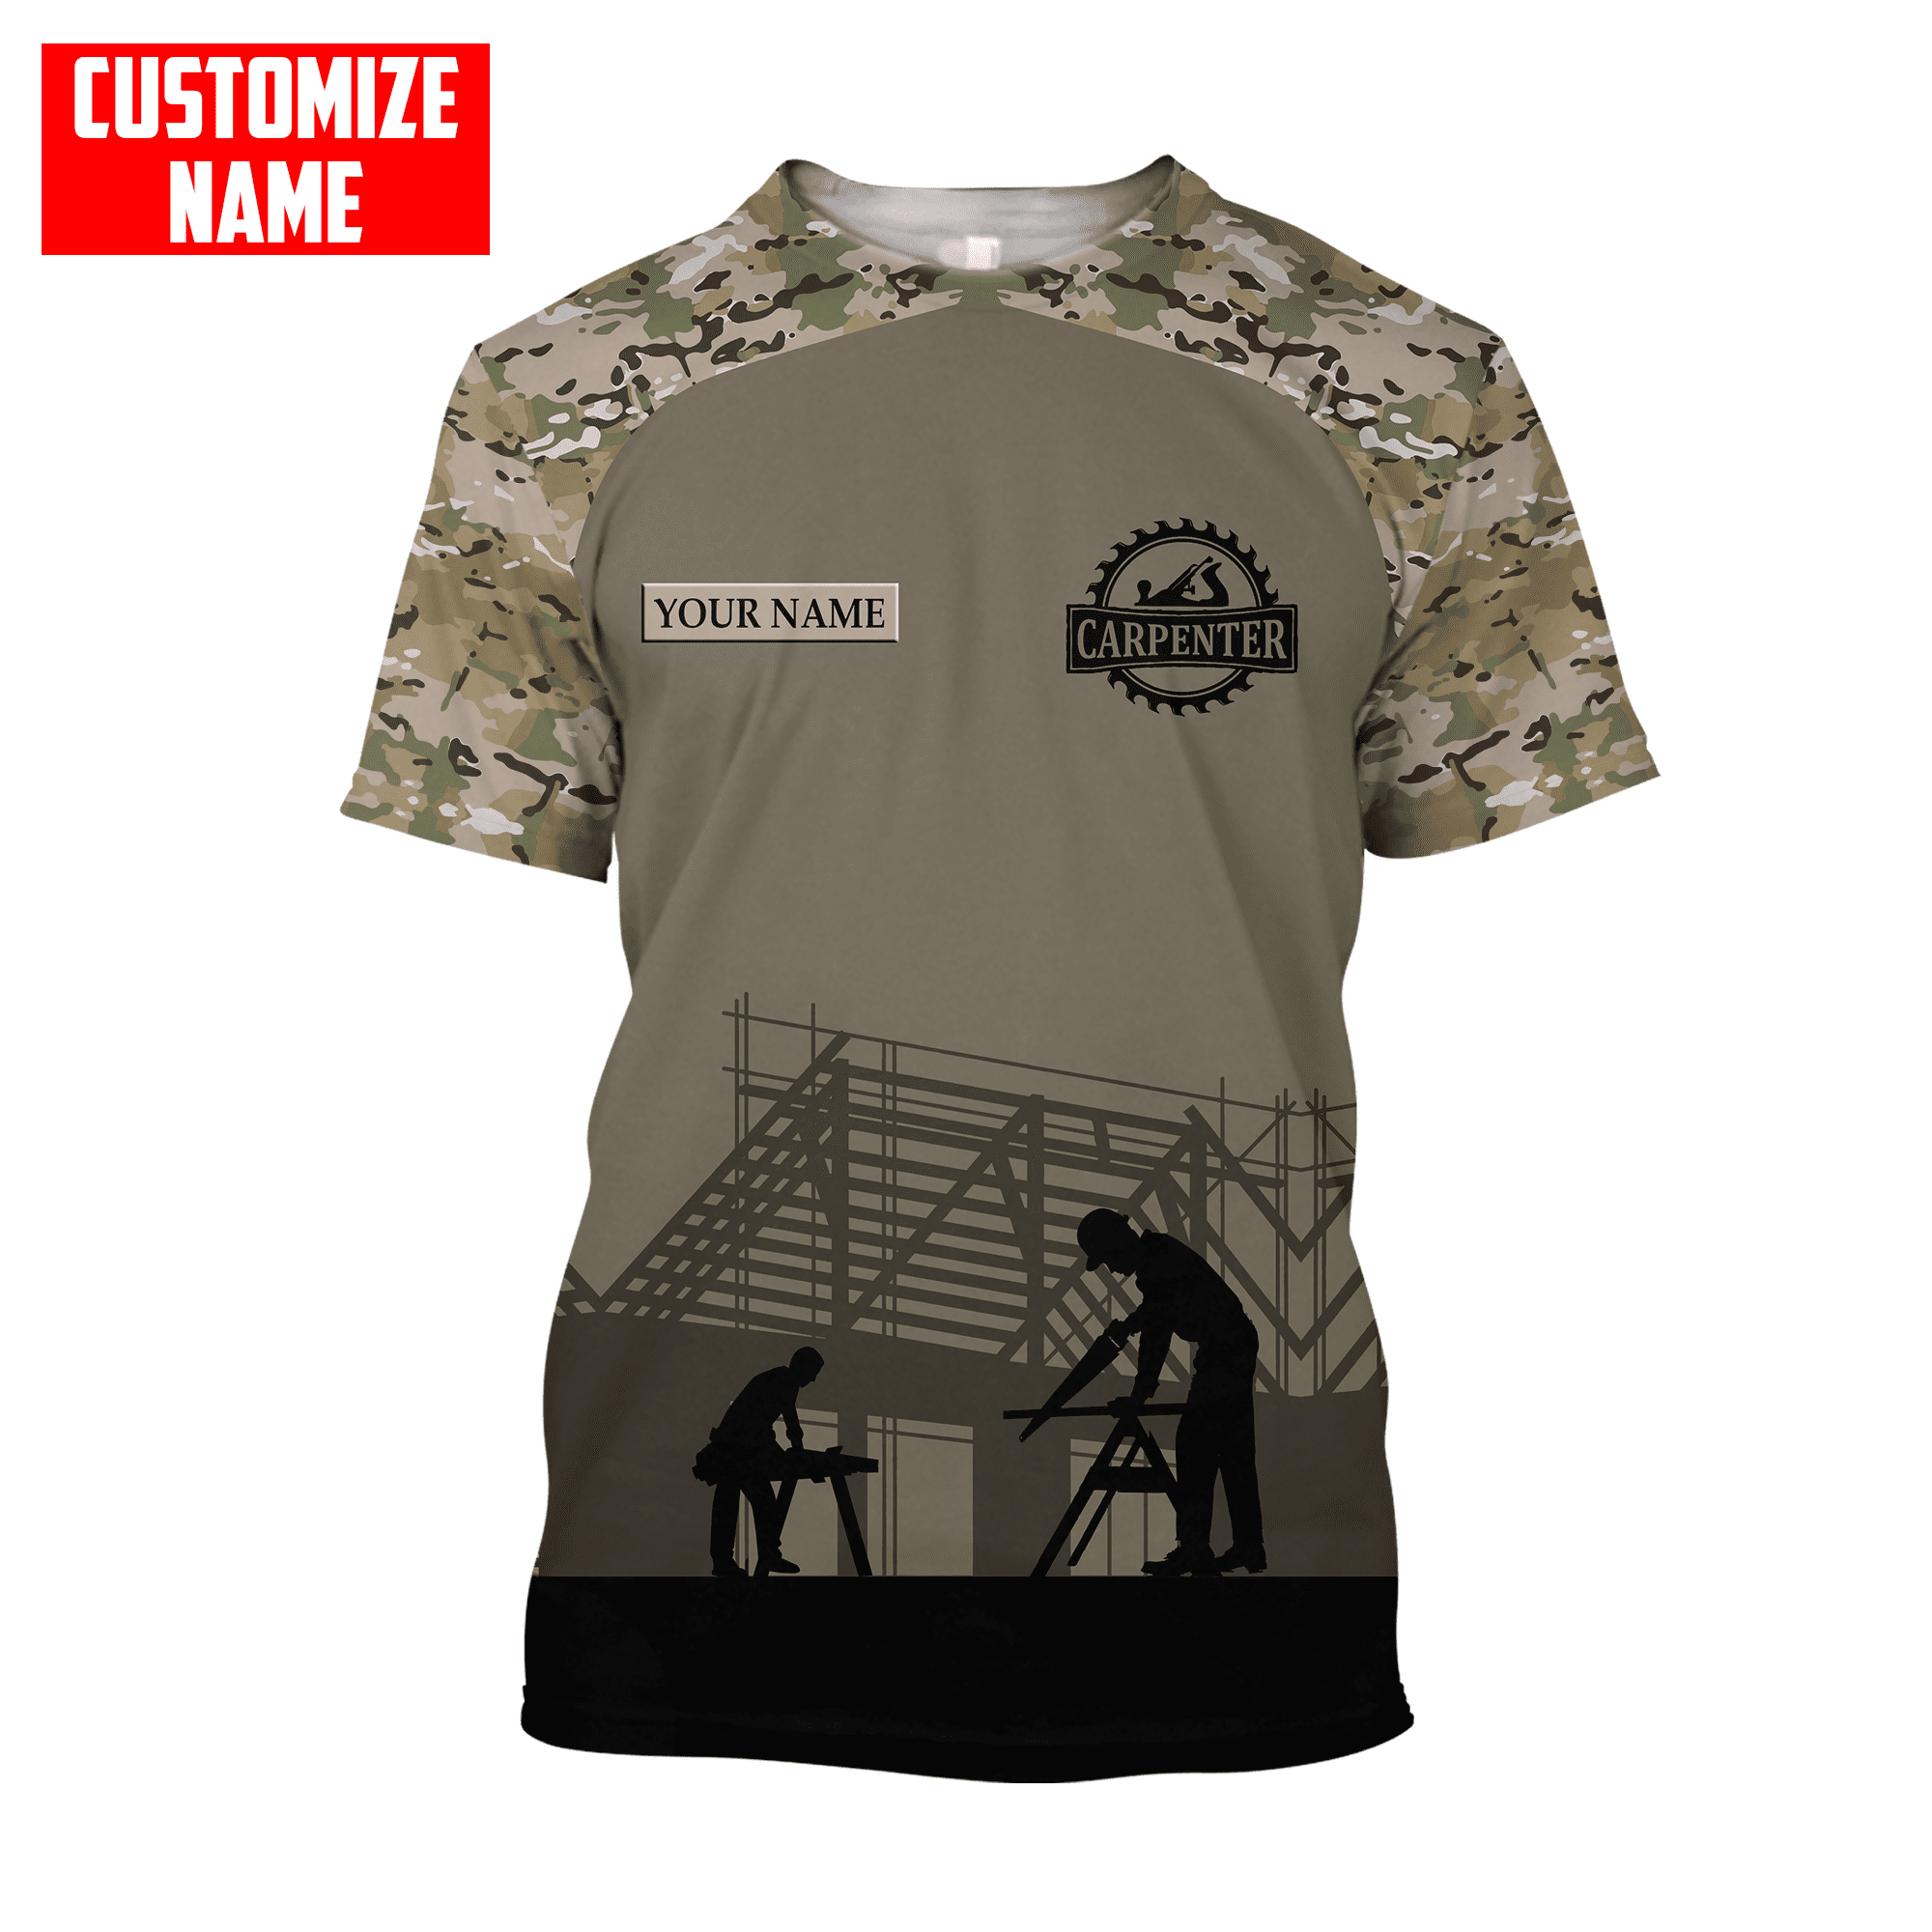 Coolspod Customized Name Carpenter Shirts Camo Pattern